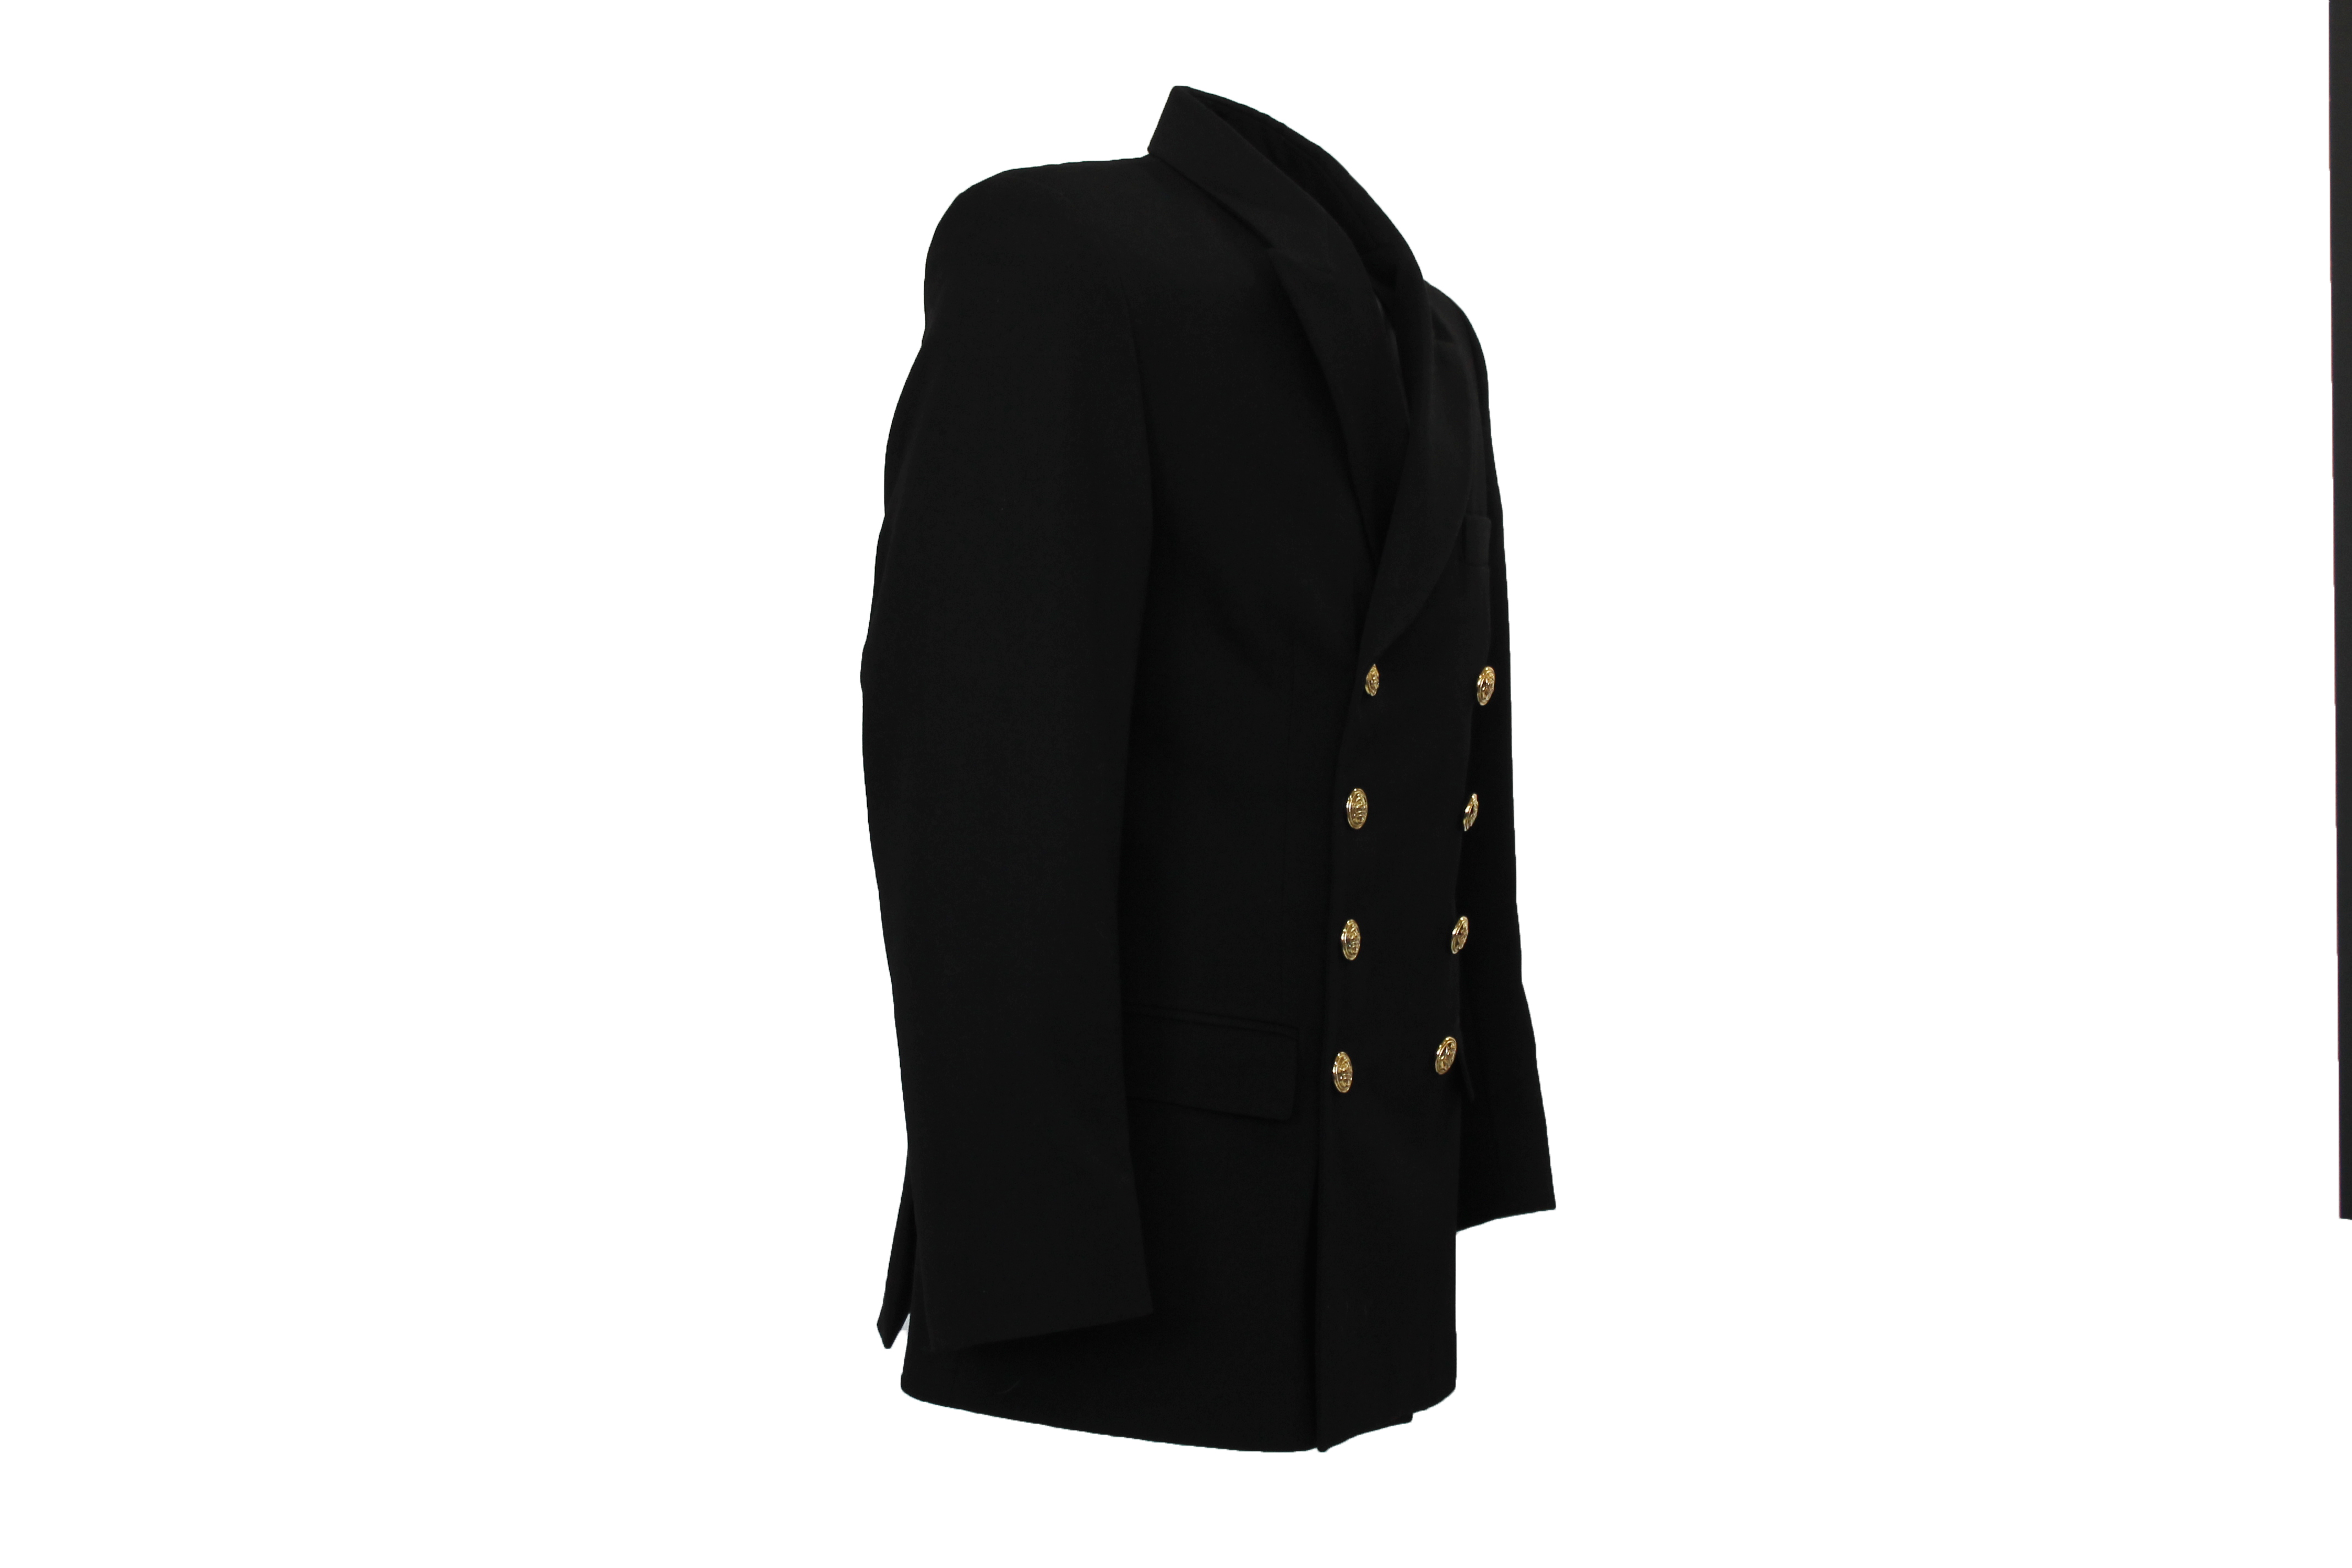 Pea Coats for Men and Women UK - Classic Navy Reefer Jacket - THE NAUTICAL  COMPANY UK